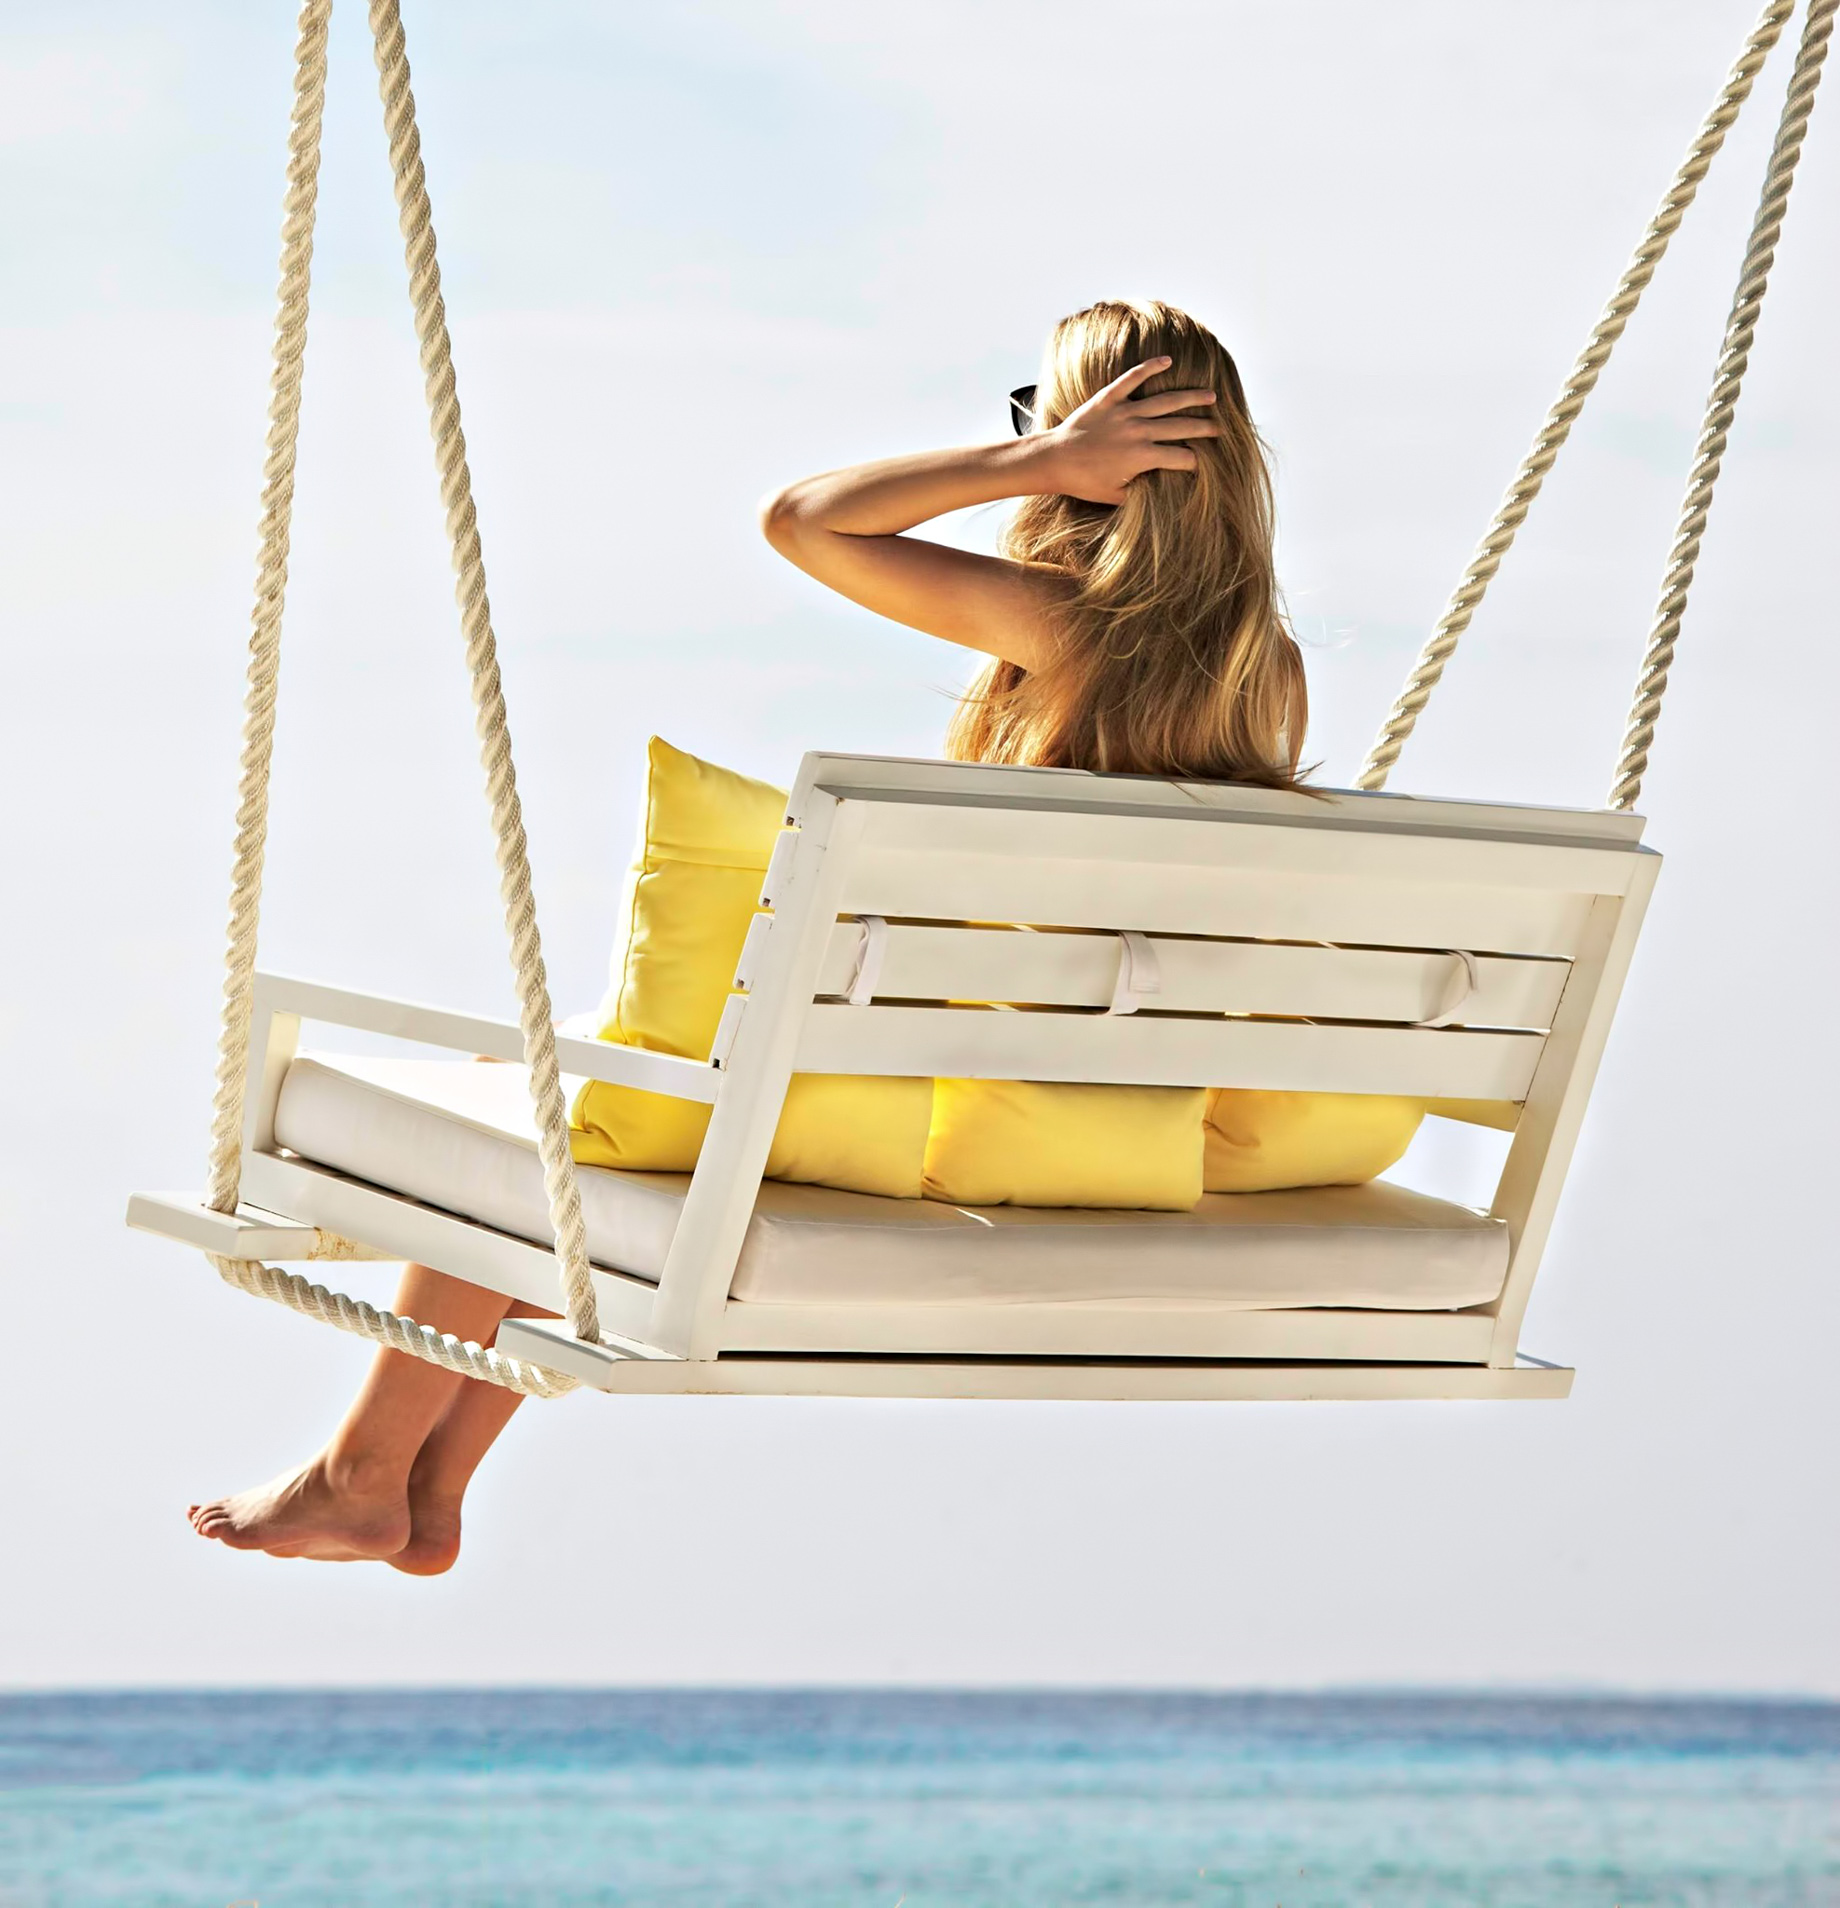 Cheval Blanc Randheli Resort – Noonu Atoll, Maldives – Oceanfront Swing